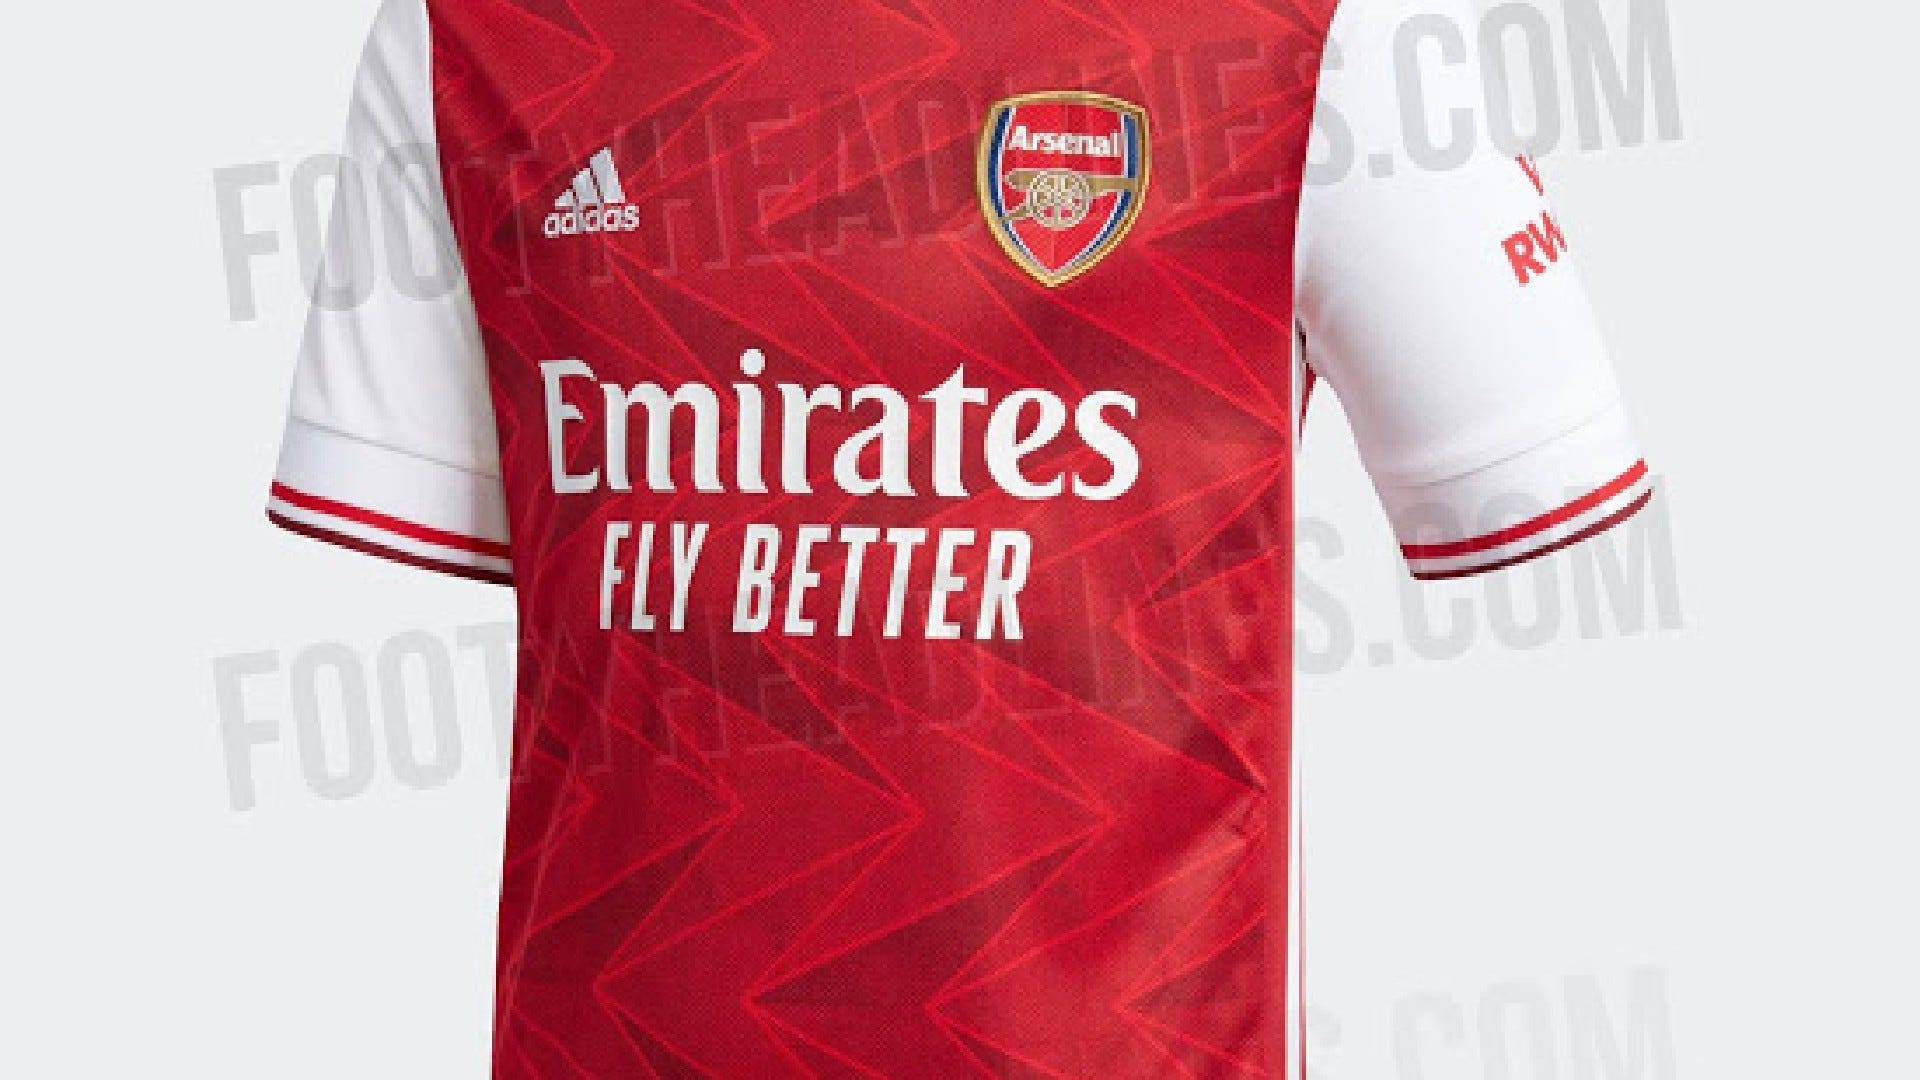 Los filtrados uniformes la Premier League 2020/2021 | Goal.com